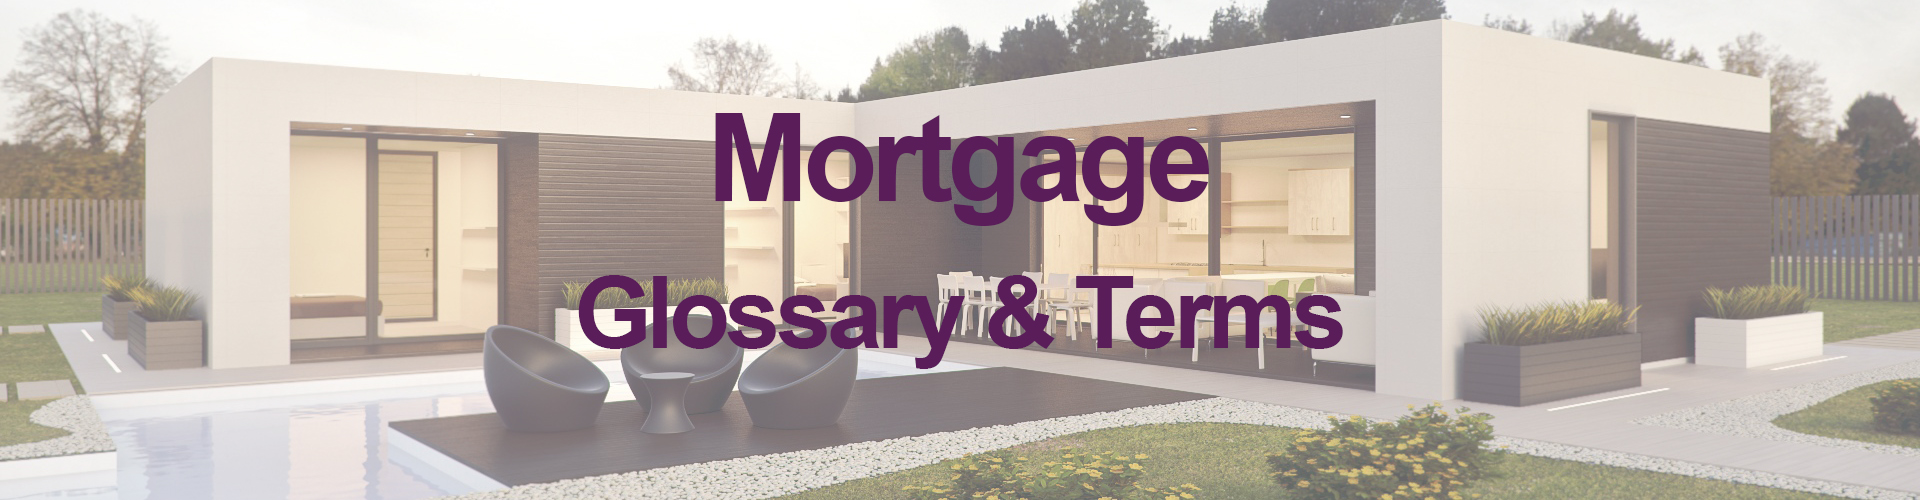 mortgage glossary